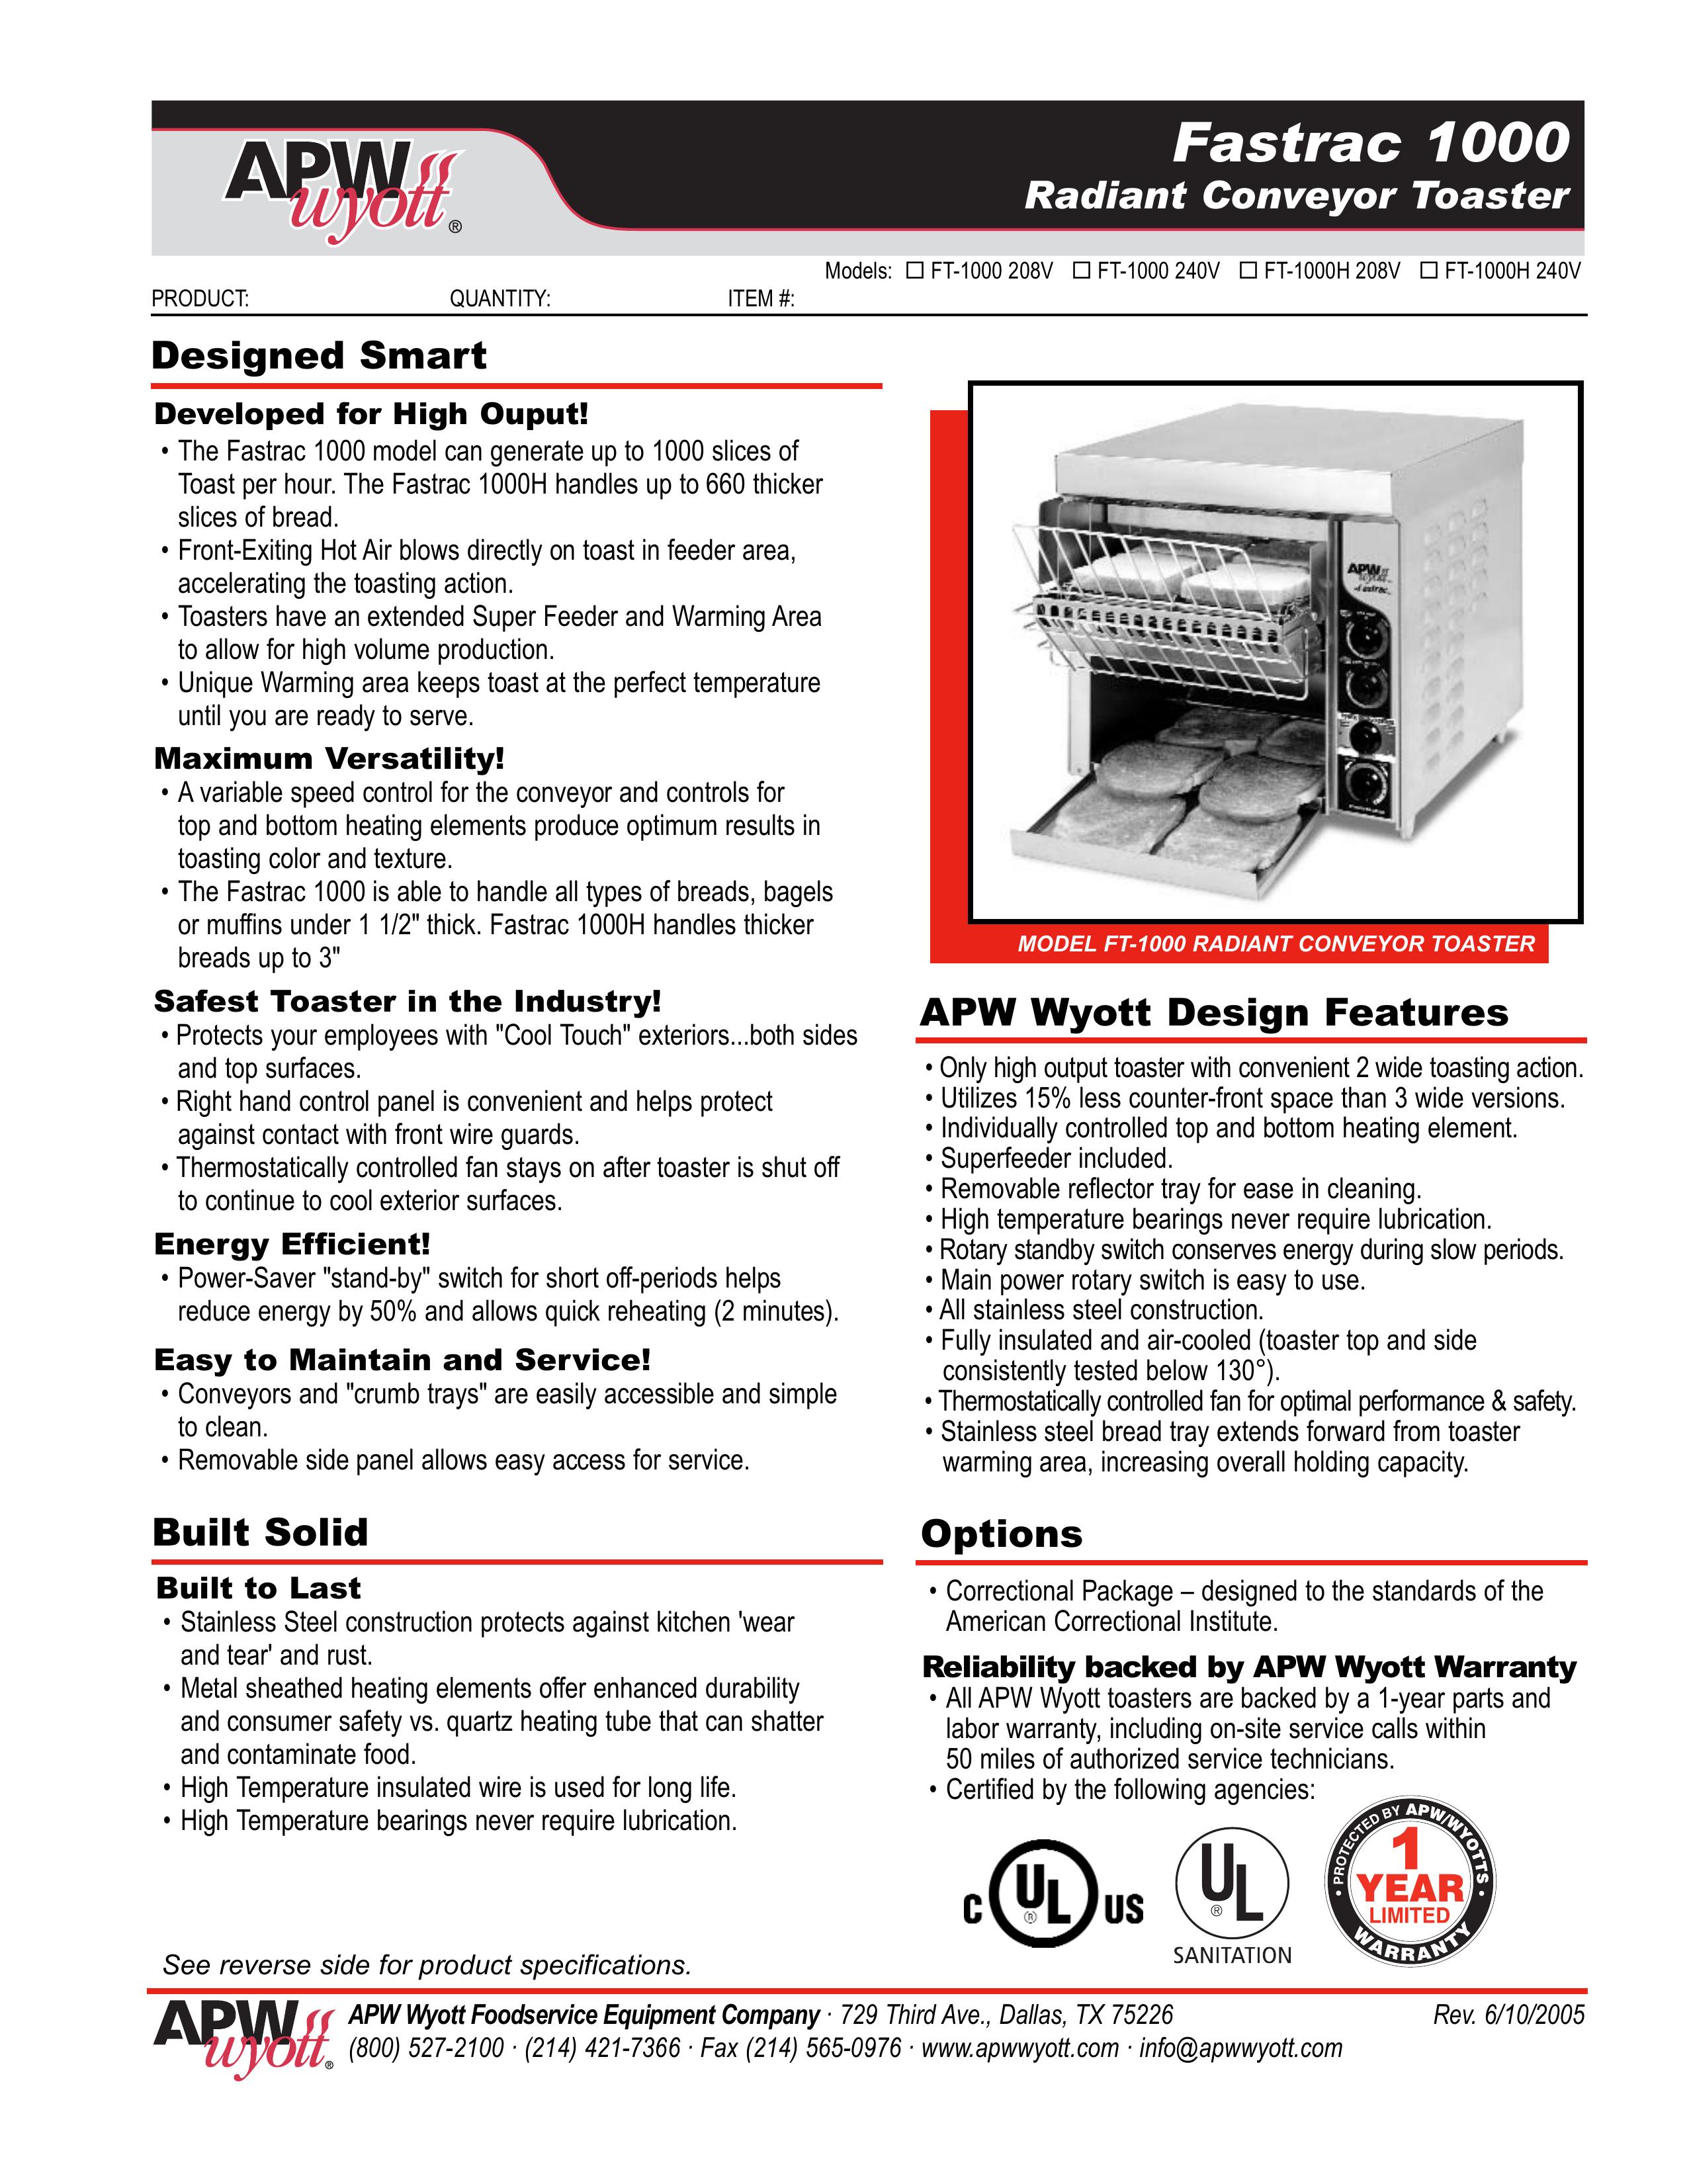 APW Wyott Fastrac 1000 Toaster User Manual